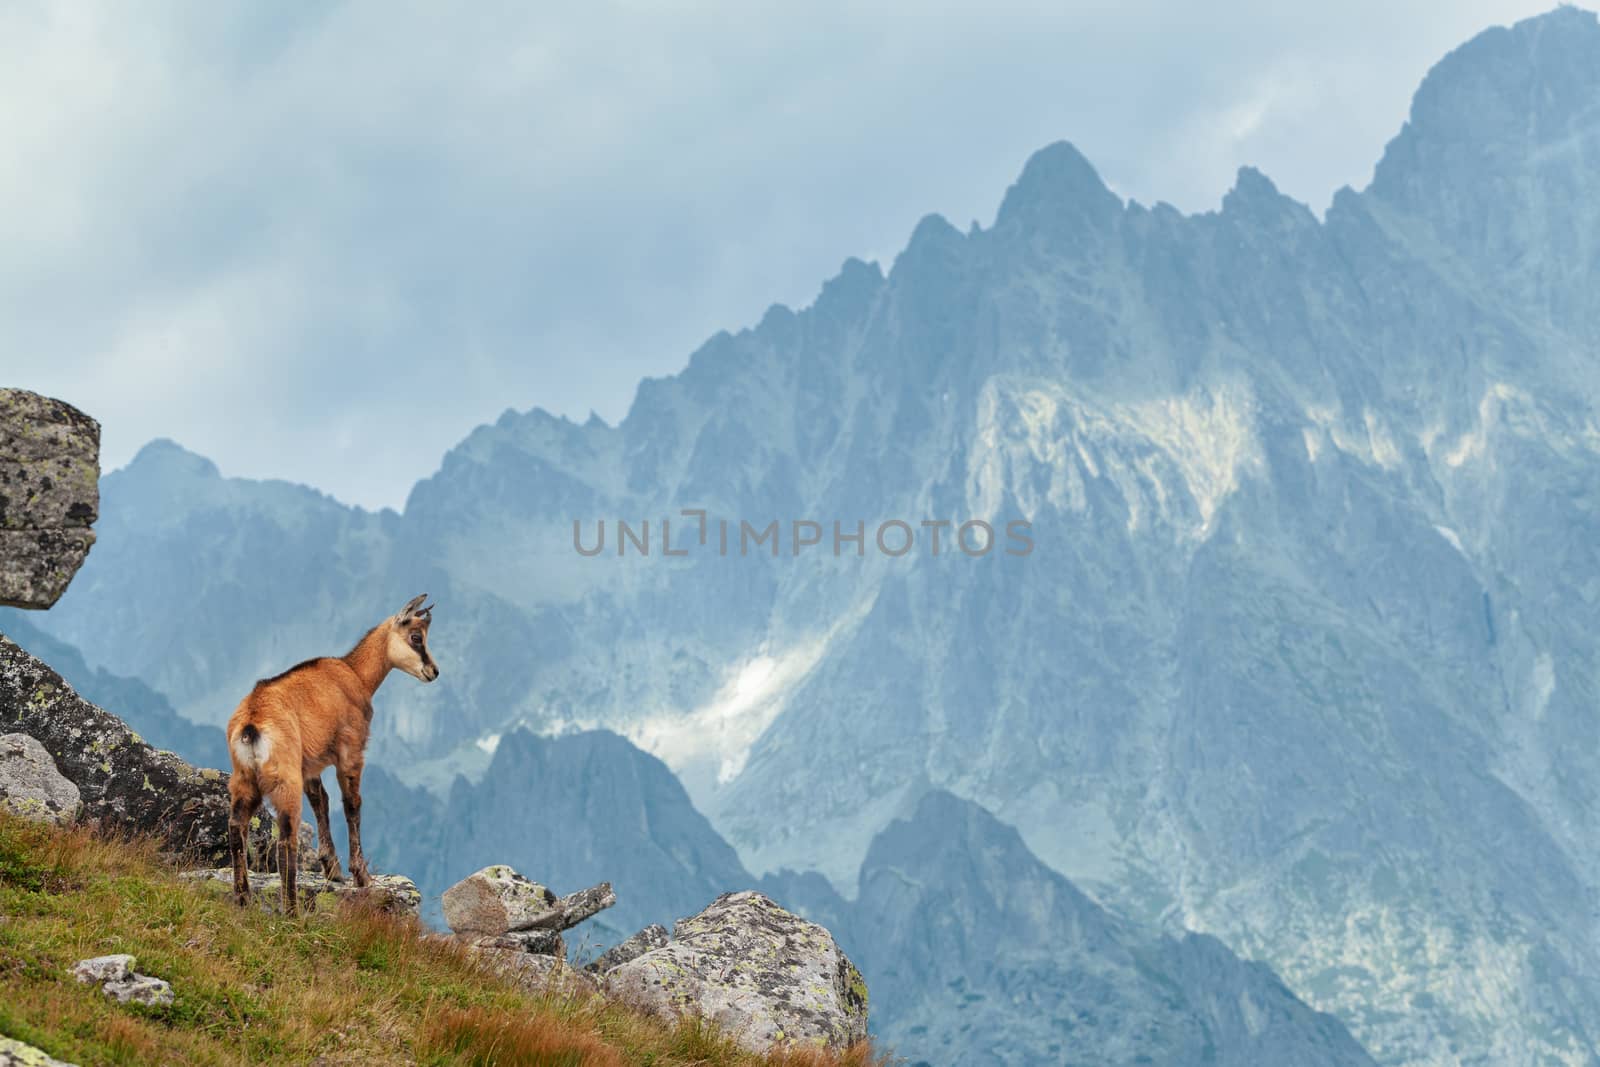 Tatra chamois in wilde environment on the background of mountains. Hight Tatras, Slovakia, Europe